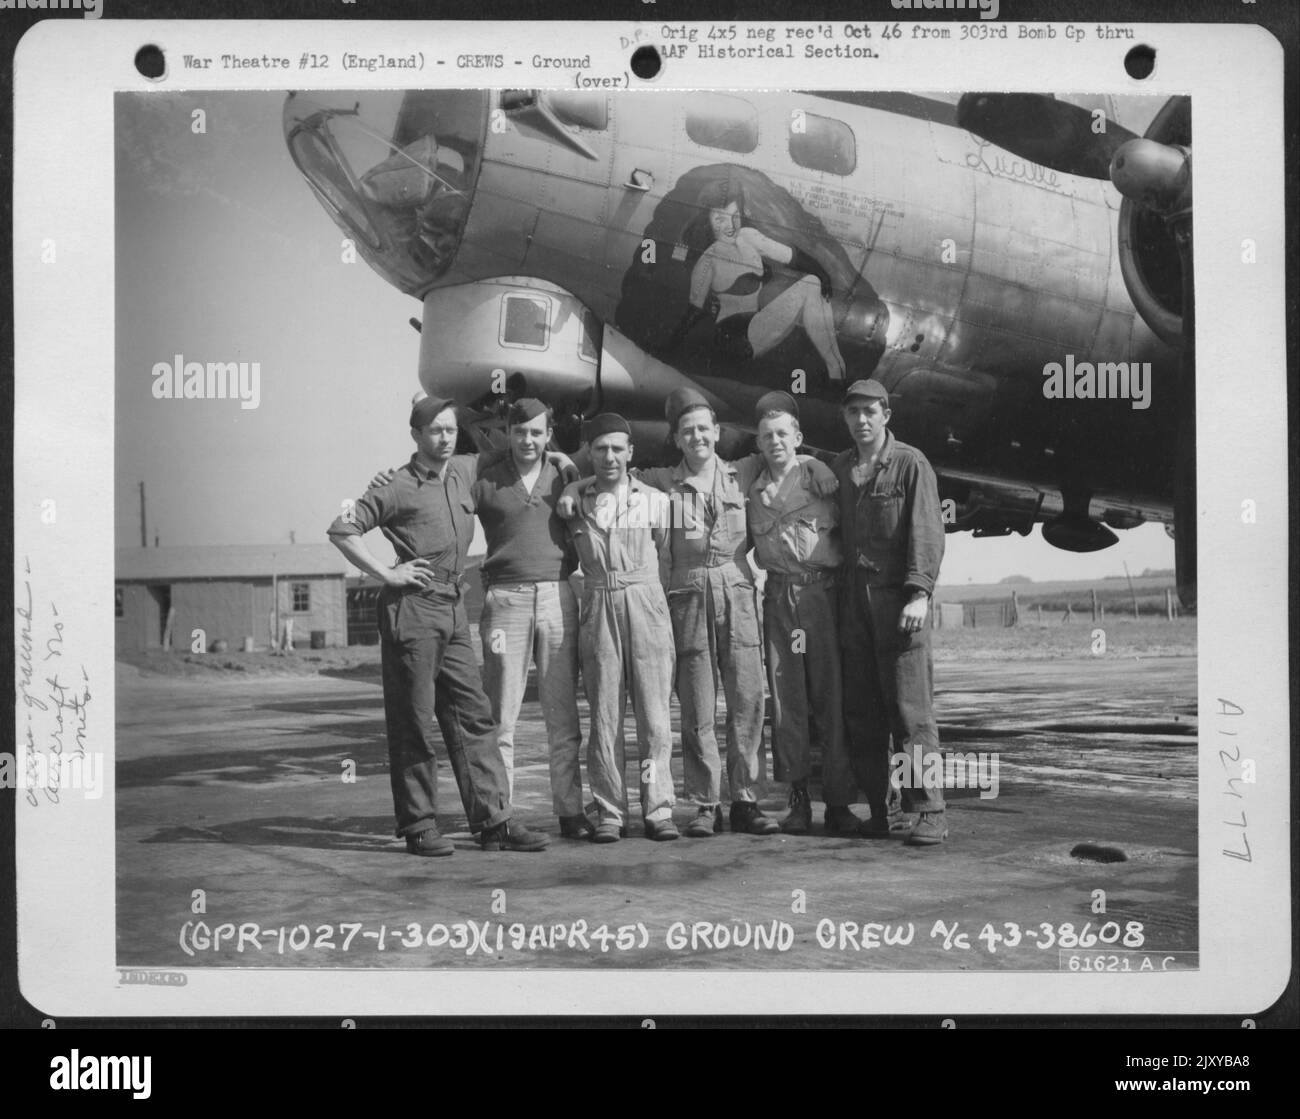 Bodenbesatzungen der Bomb Squadron 359Th, 303. Bomb Group, vor Einer Boeing B-17 Flying Fortress. England, 19. April 1945. Flugzeug Nr. 43-38608. Stockfoto